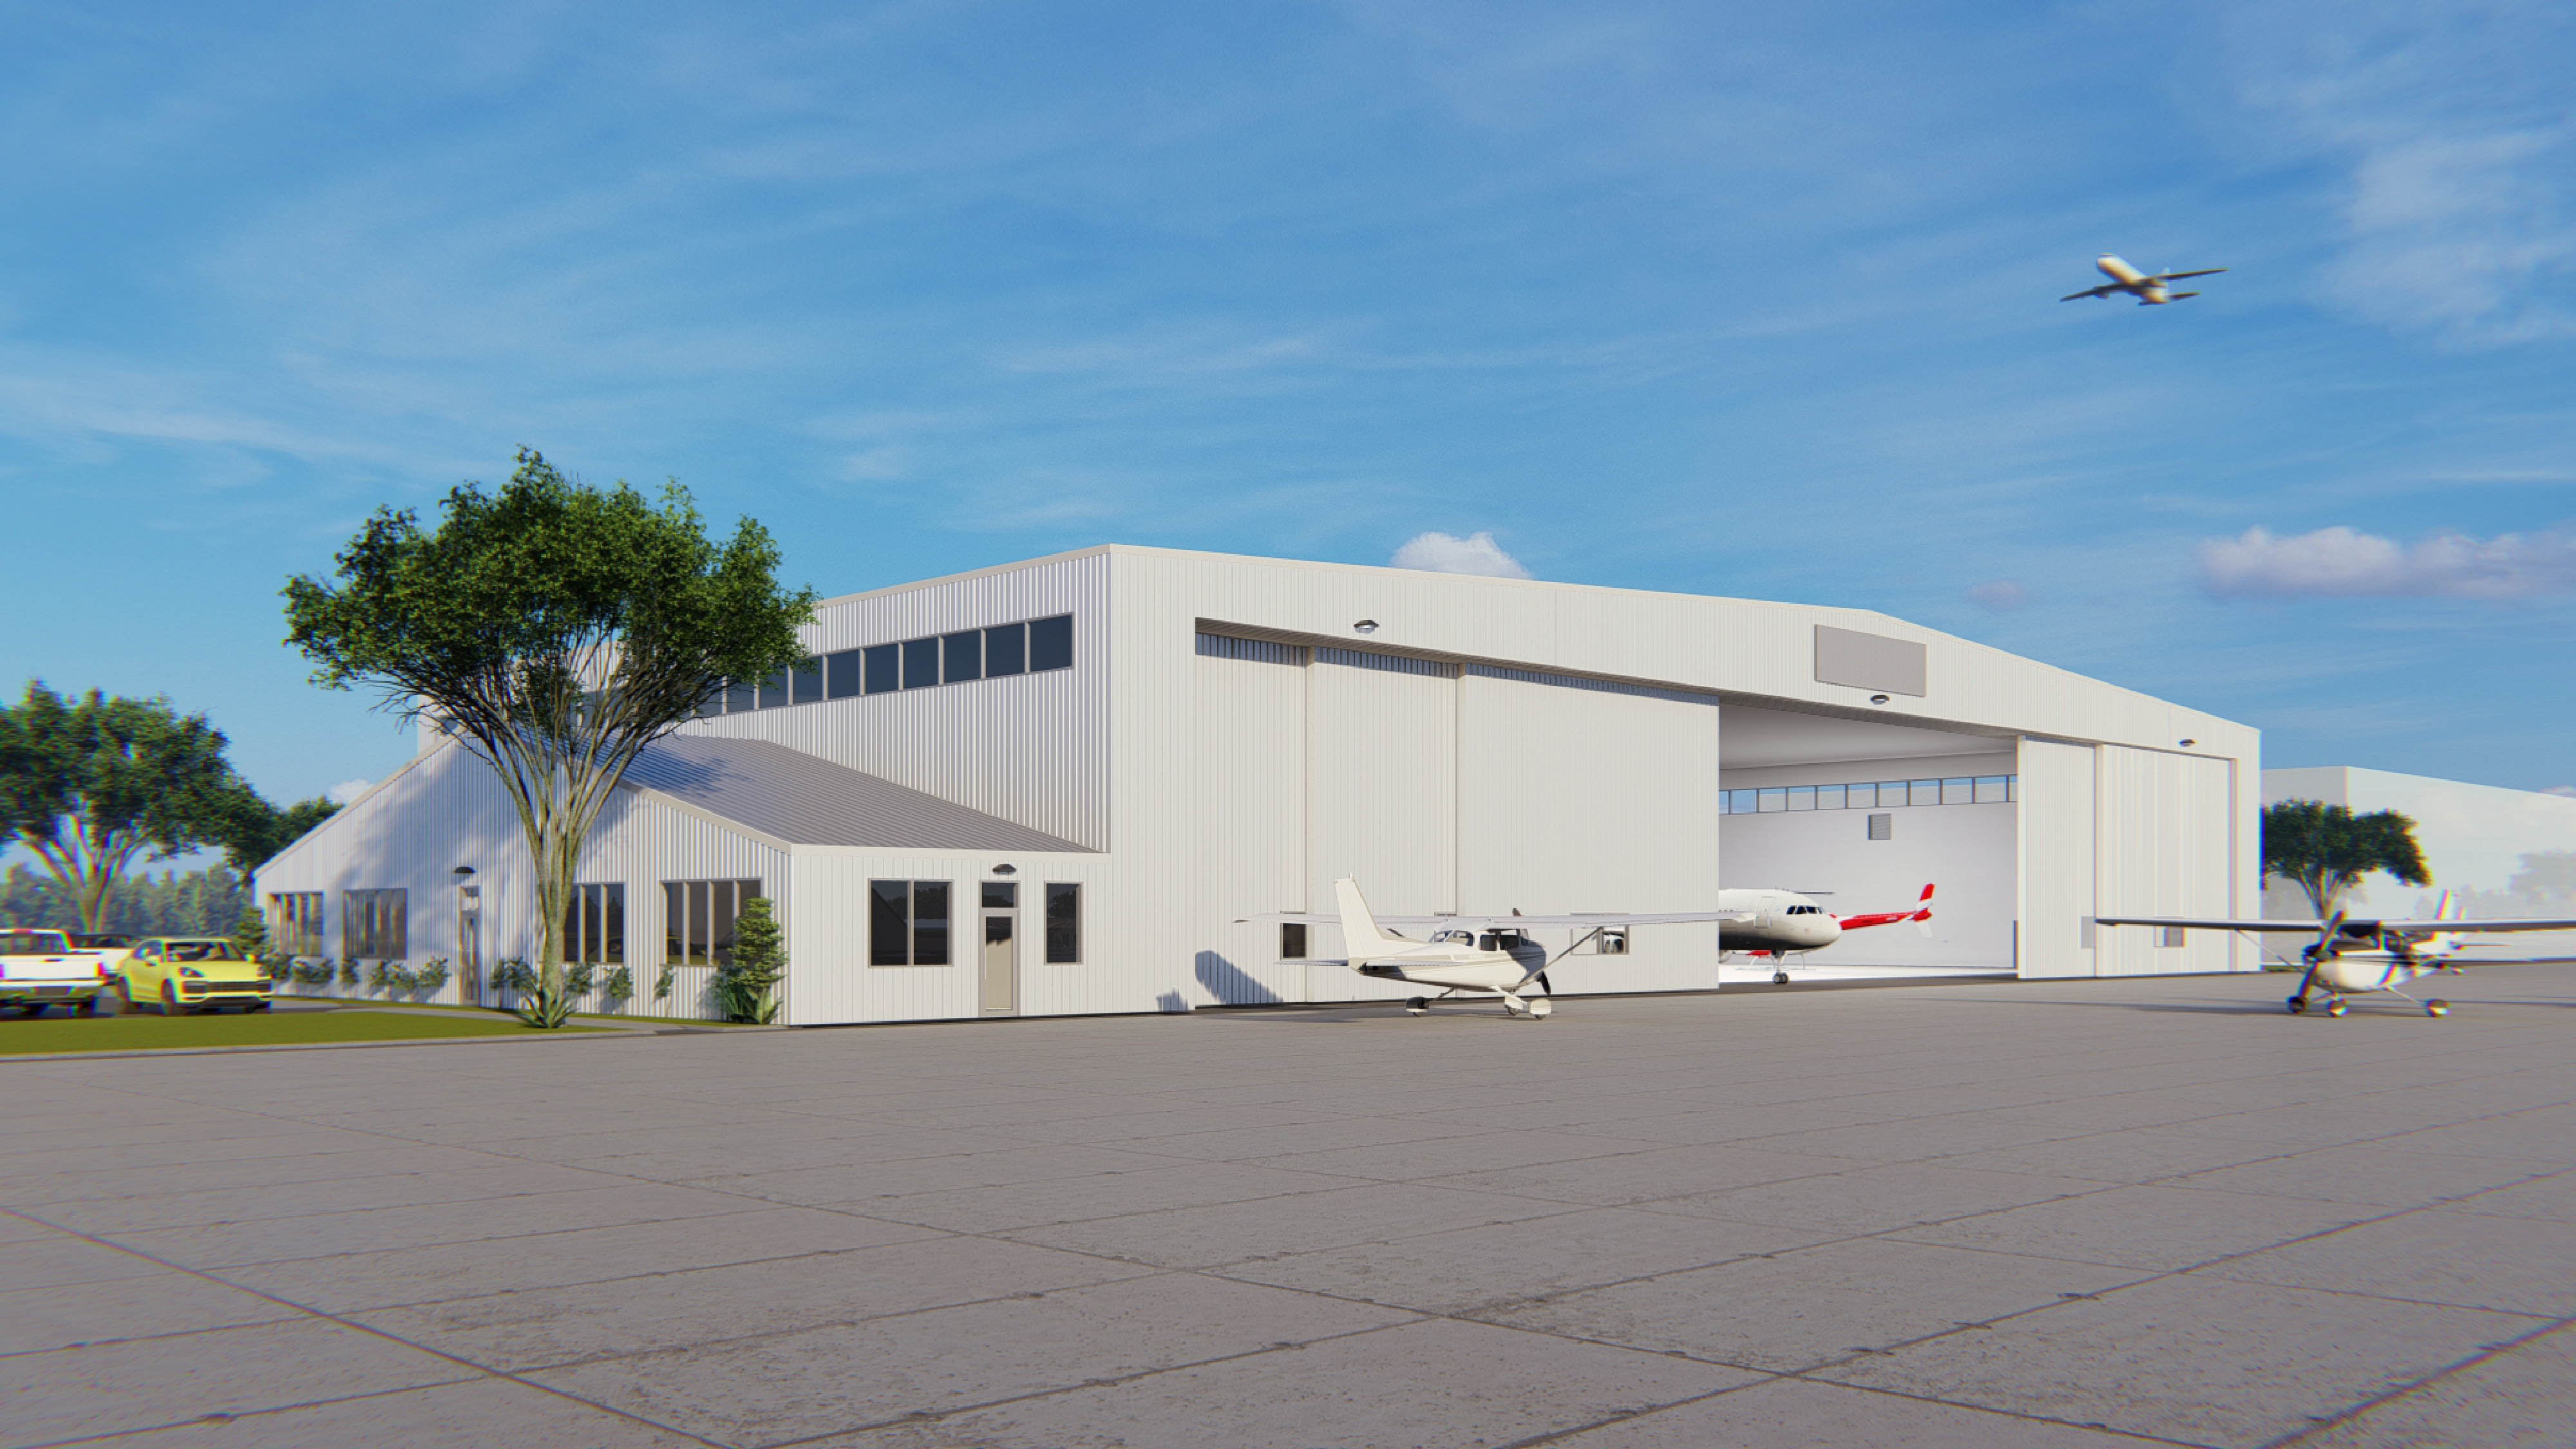 Hangar_View-1.jpg